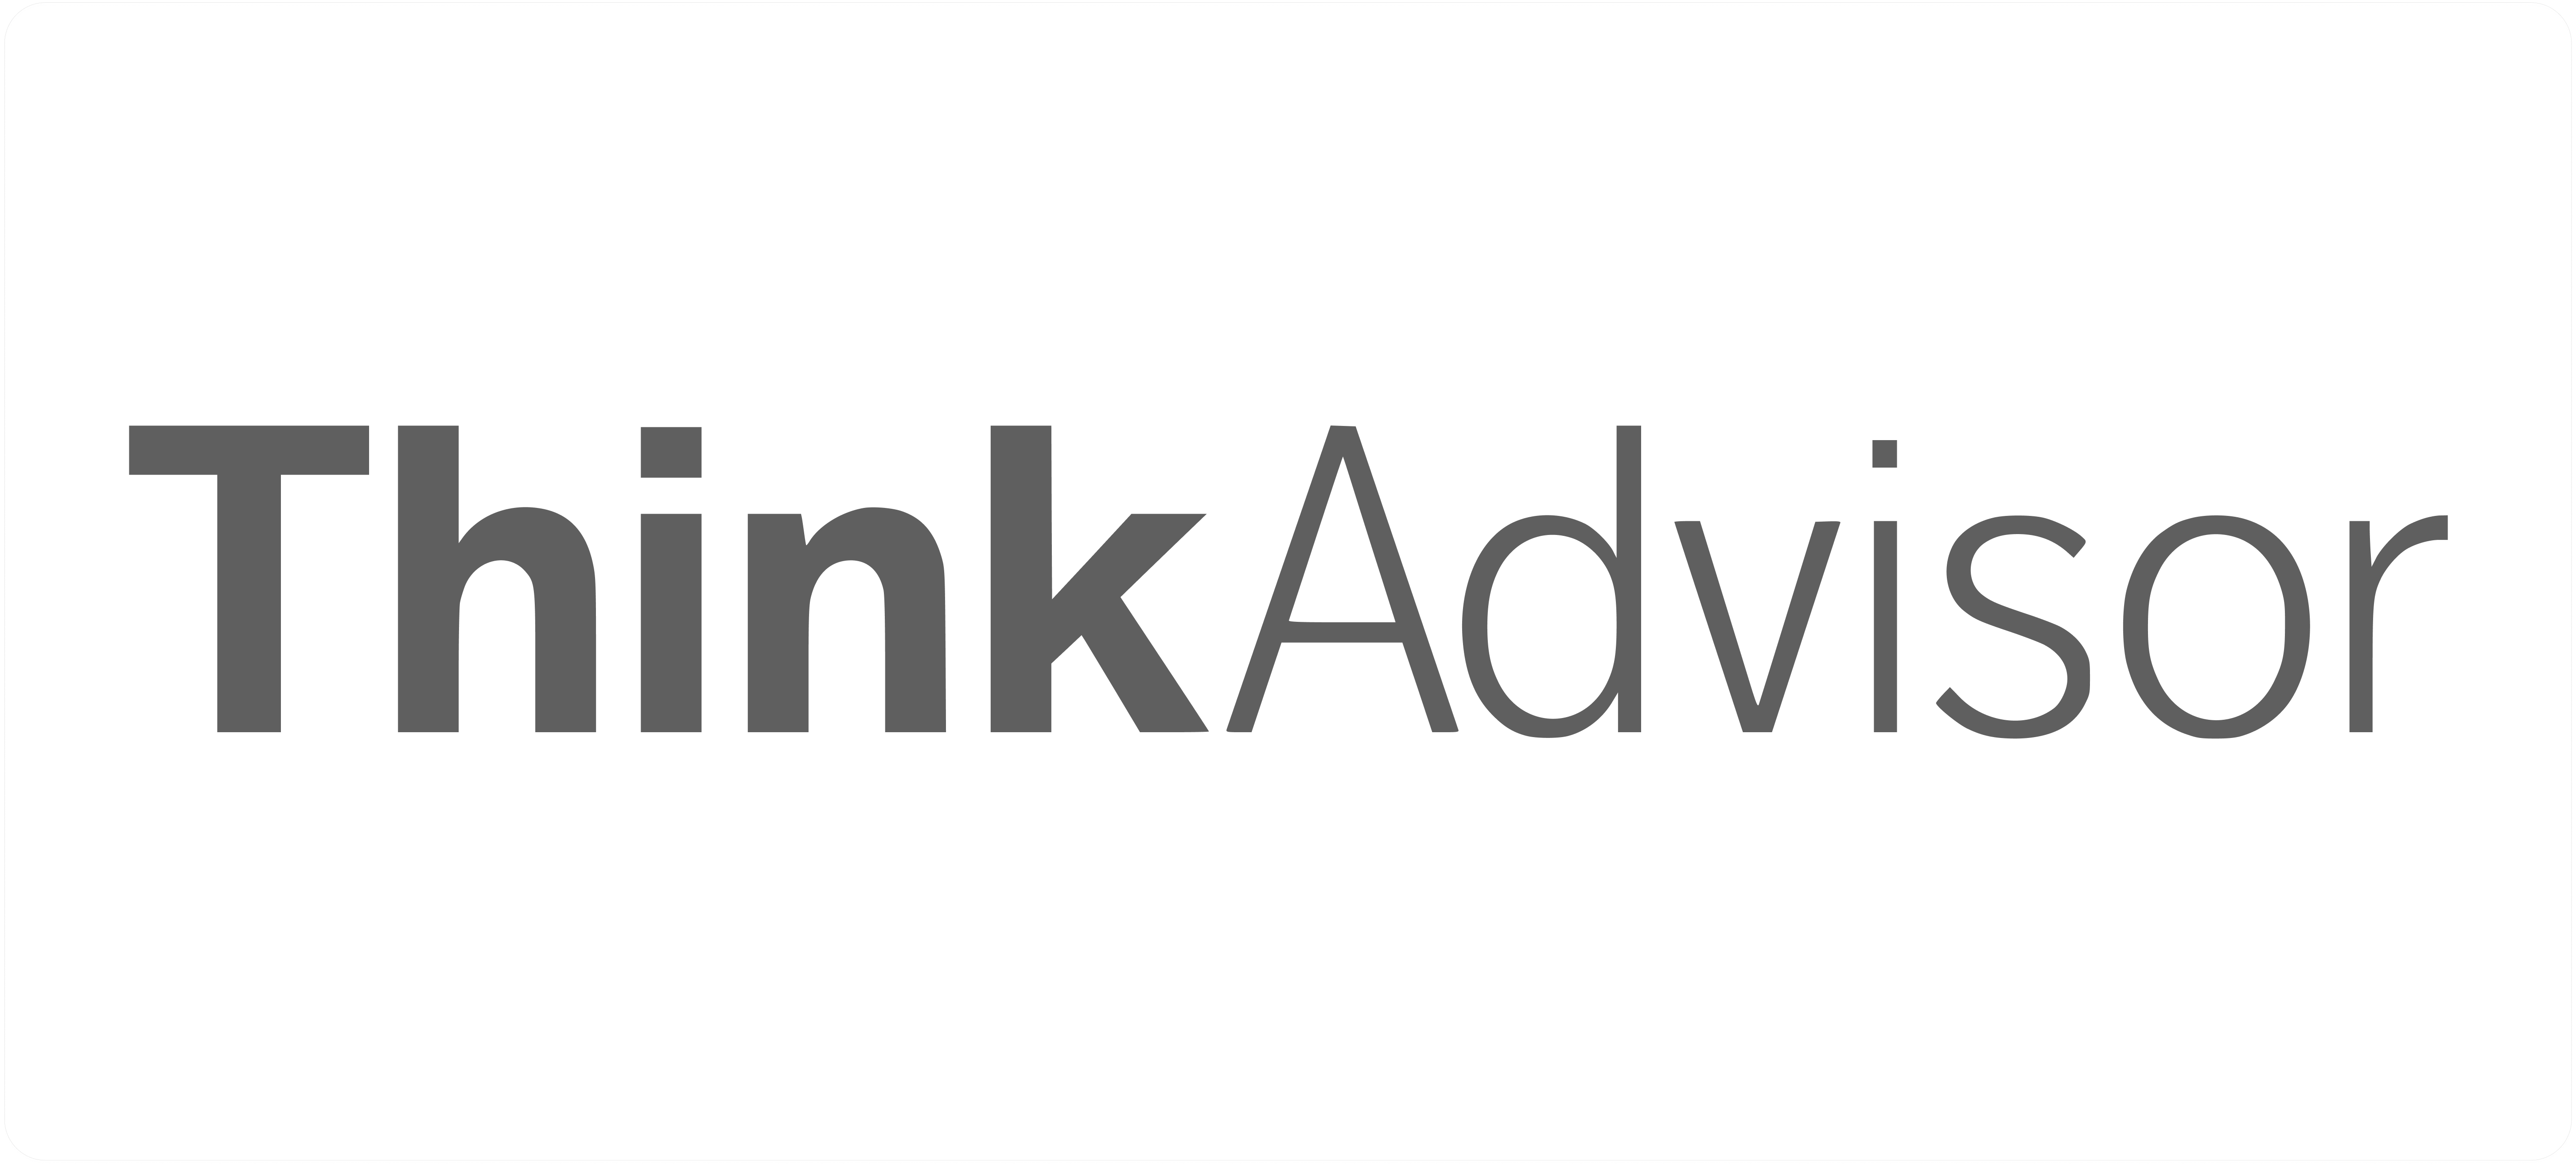 Zoe Financial | Find an Advisor | ThinkAdvisor Feature